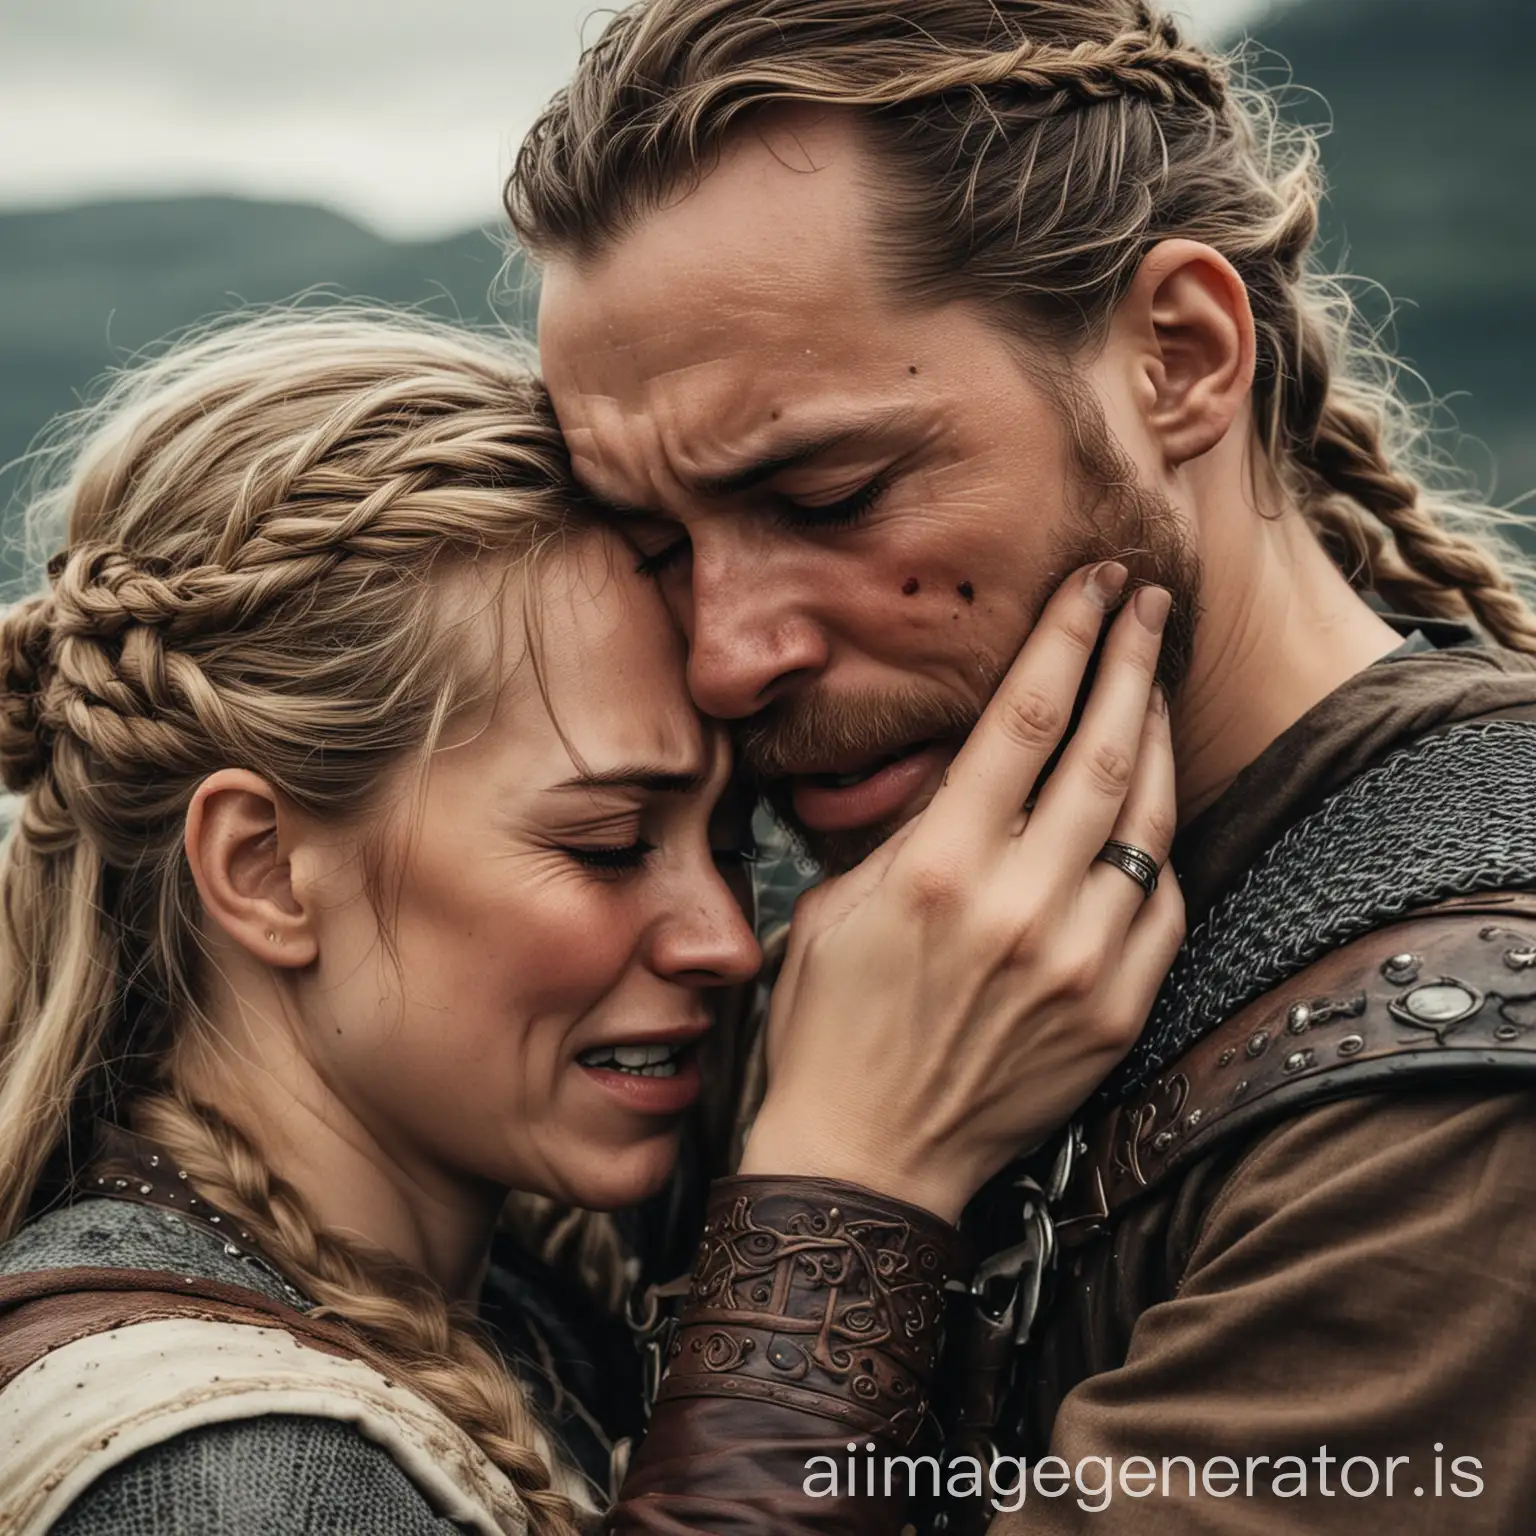 Woman-Crying-Embracing-Her-Viking-Husband-in-Emotional-Distress